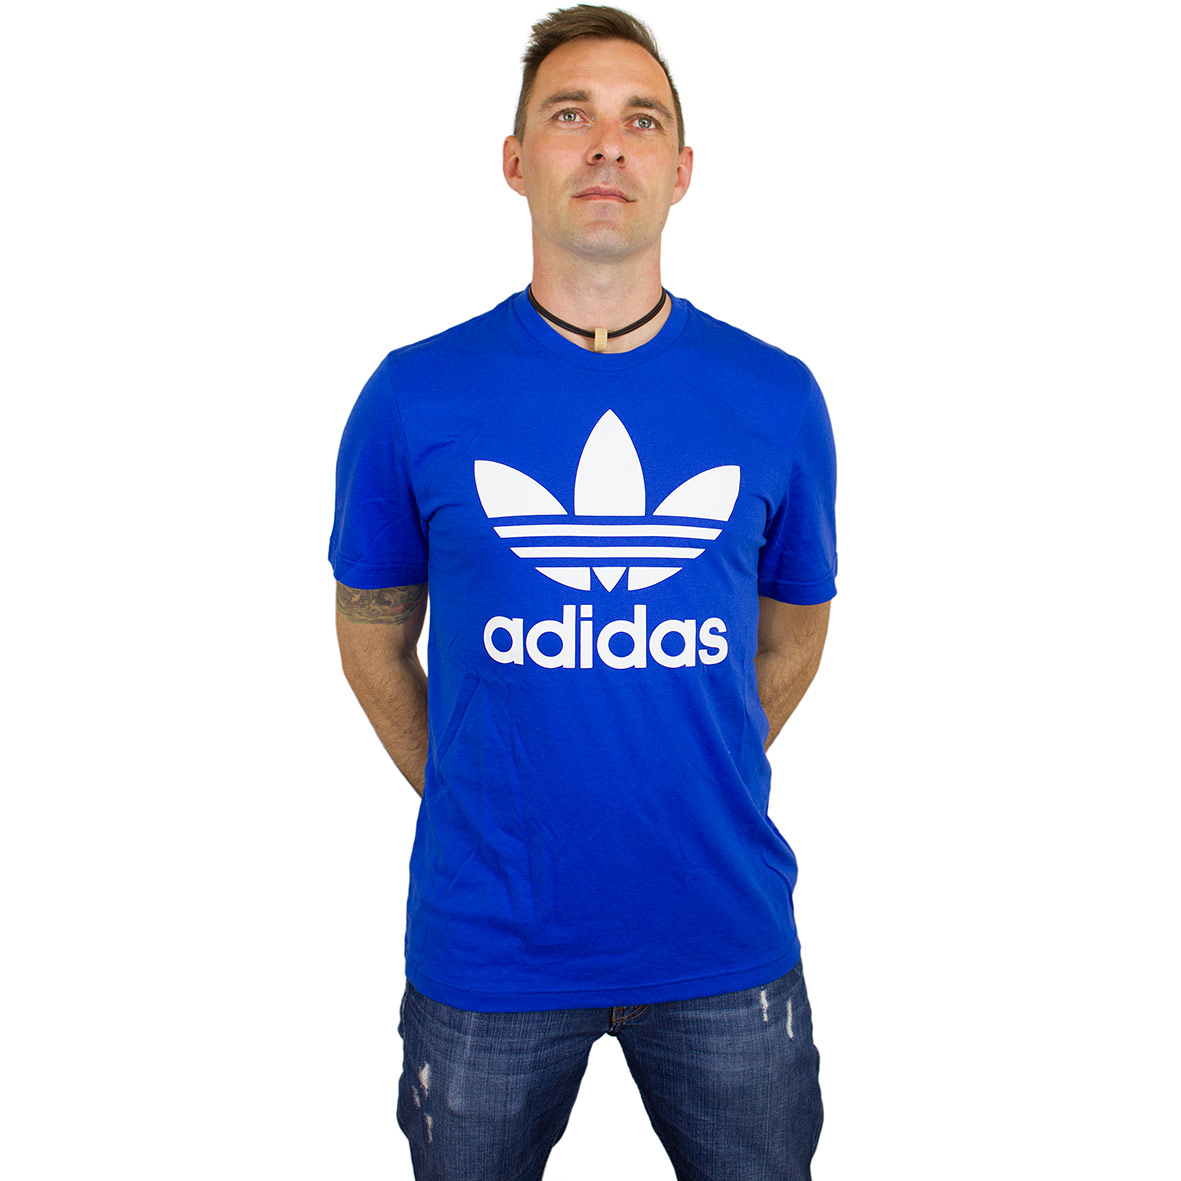 ☆ Adidas Originals T-Shirt Trefoil blau - hier bestellen!